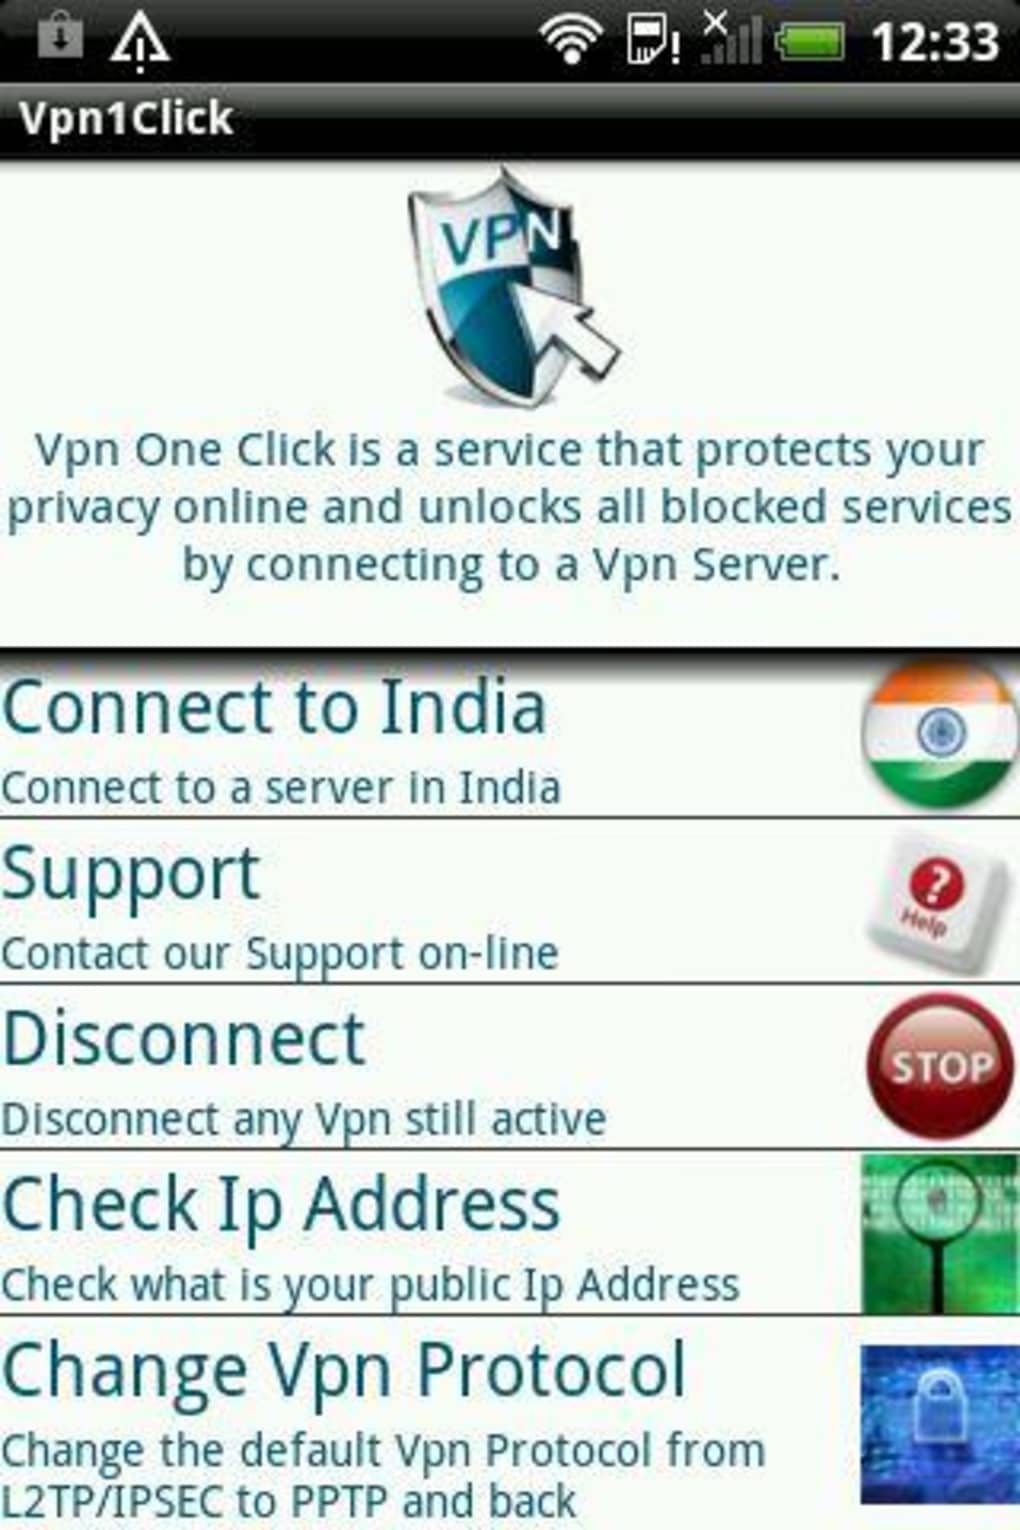 vpn one click mobile9 ringtones